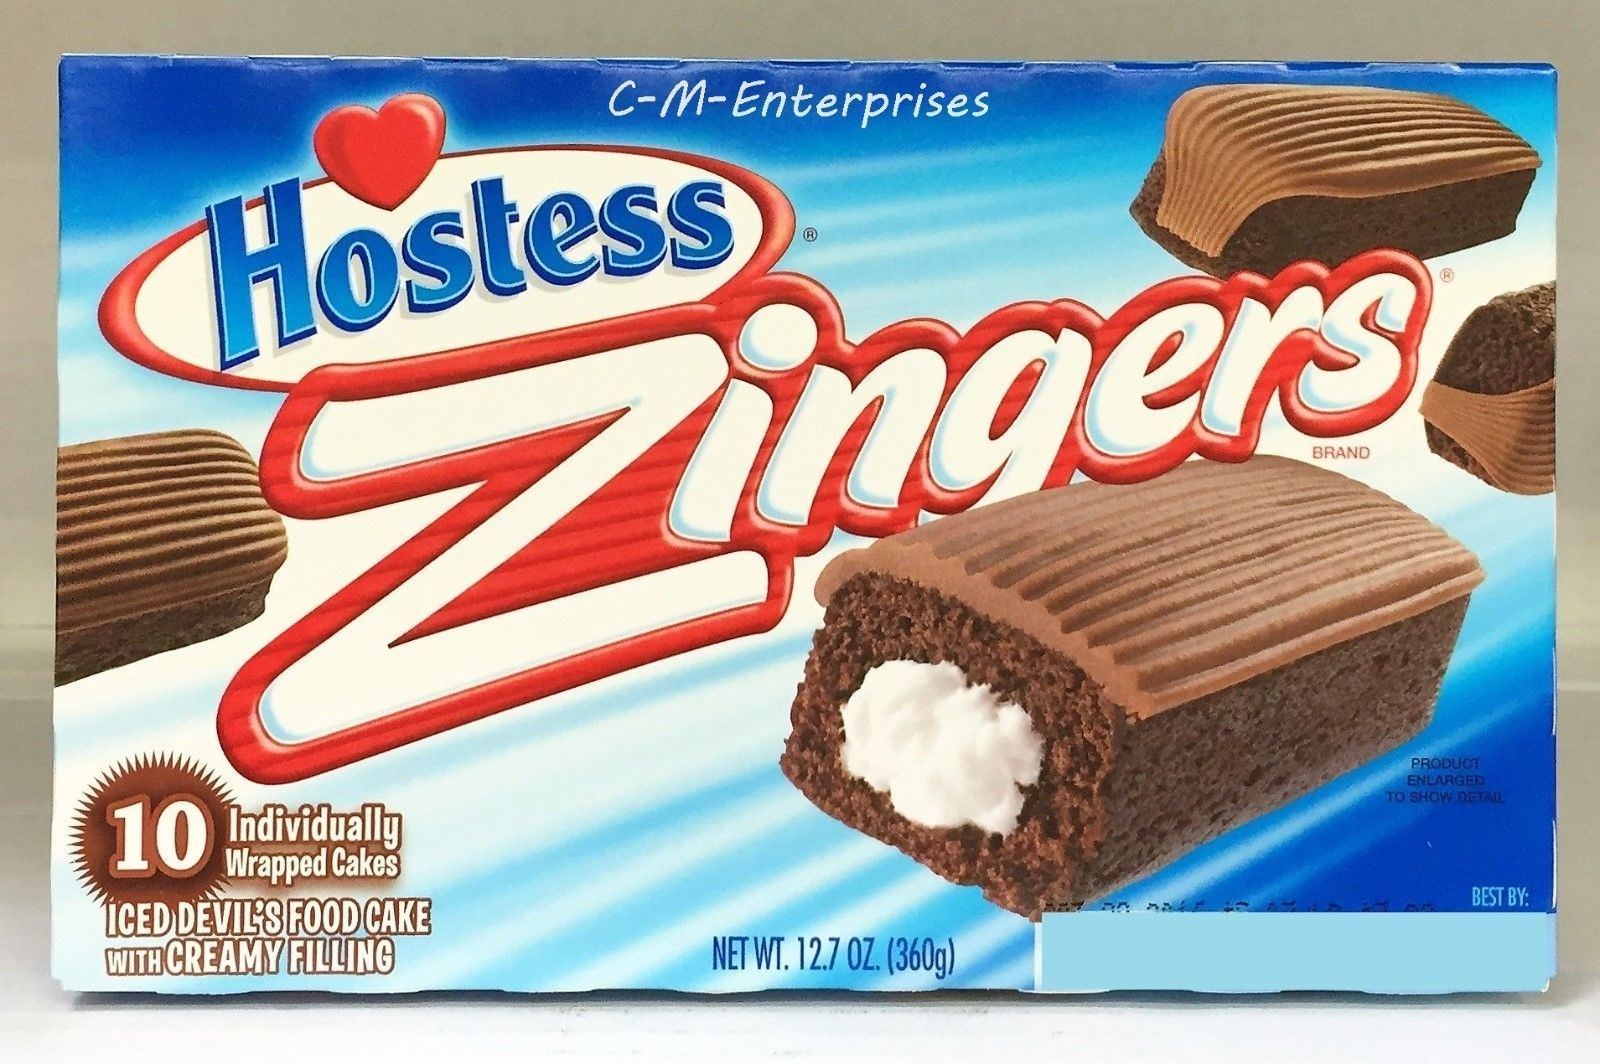 Hostess Zingers Iced Devils Food Snack Cakes 12 7 oz Desserts